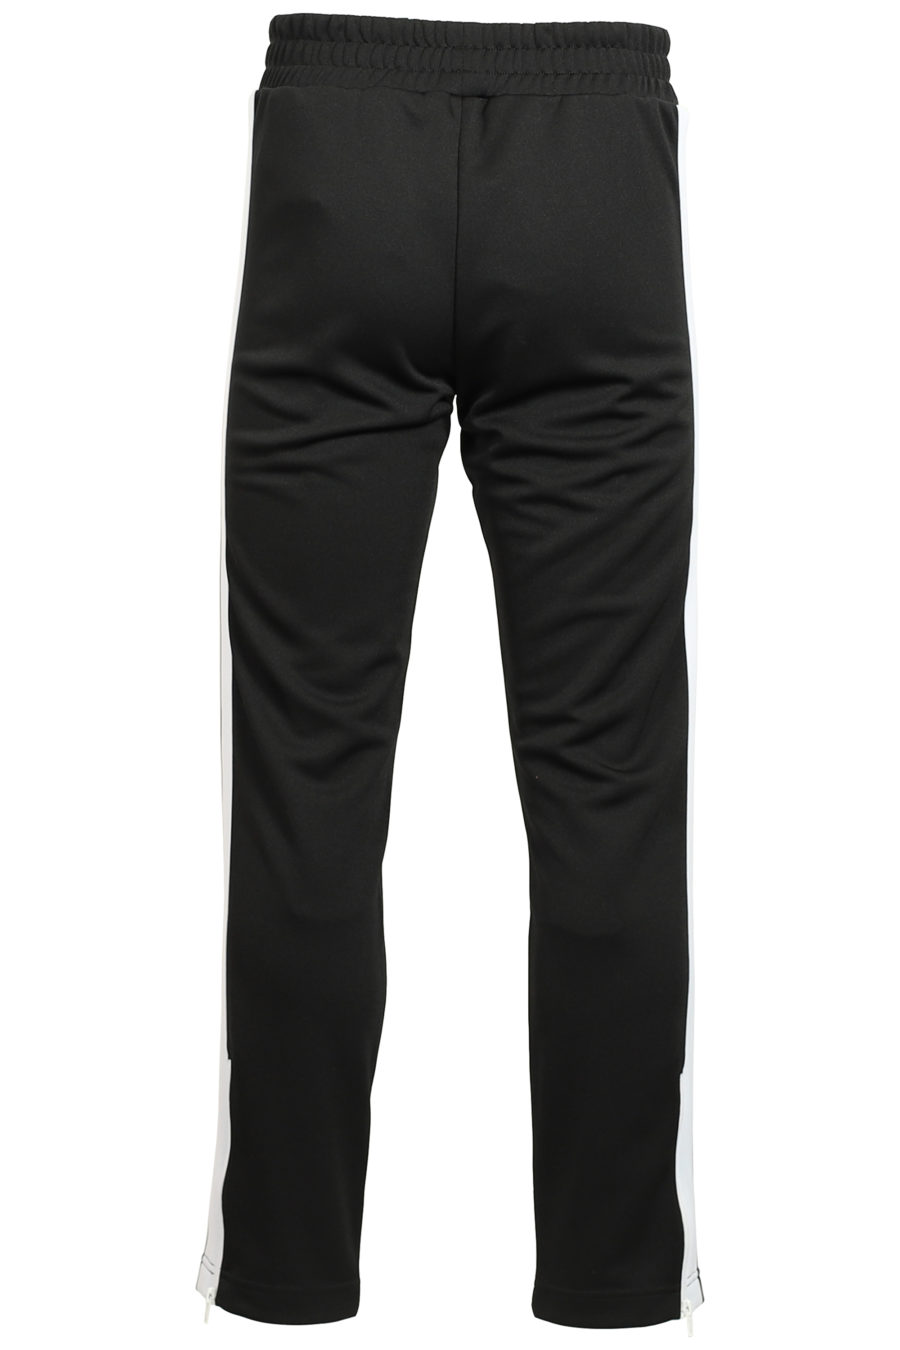 Pantalón negro con logotipo y rayas laterales - IMG 3750